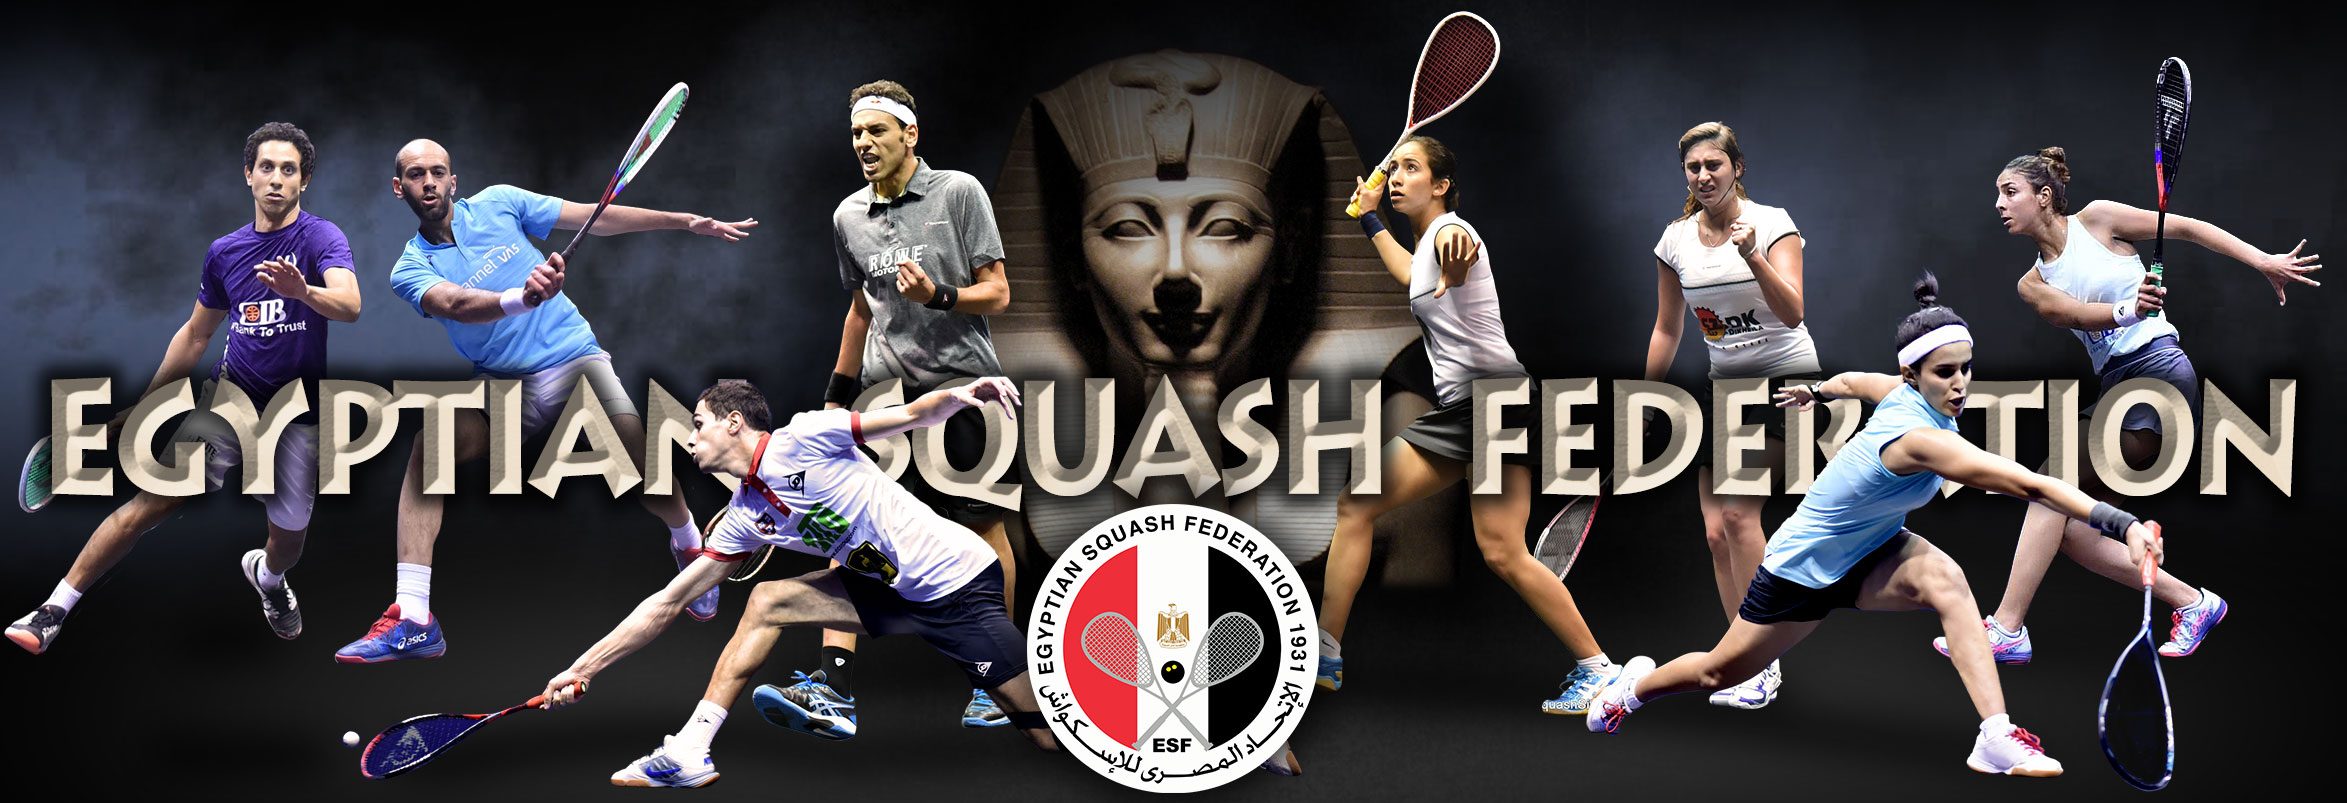 Egyptian Squash Federation